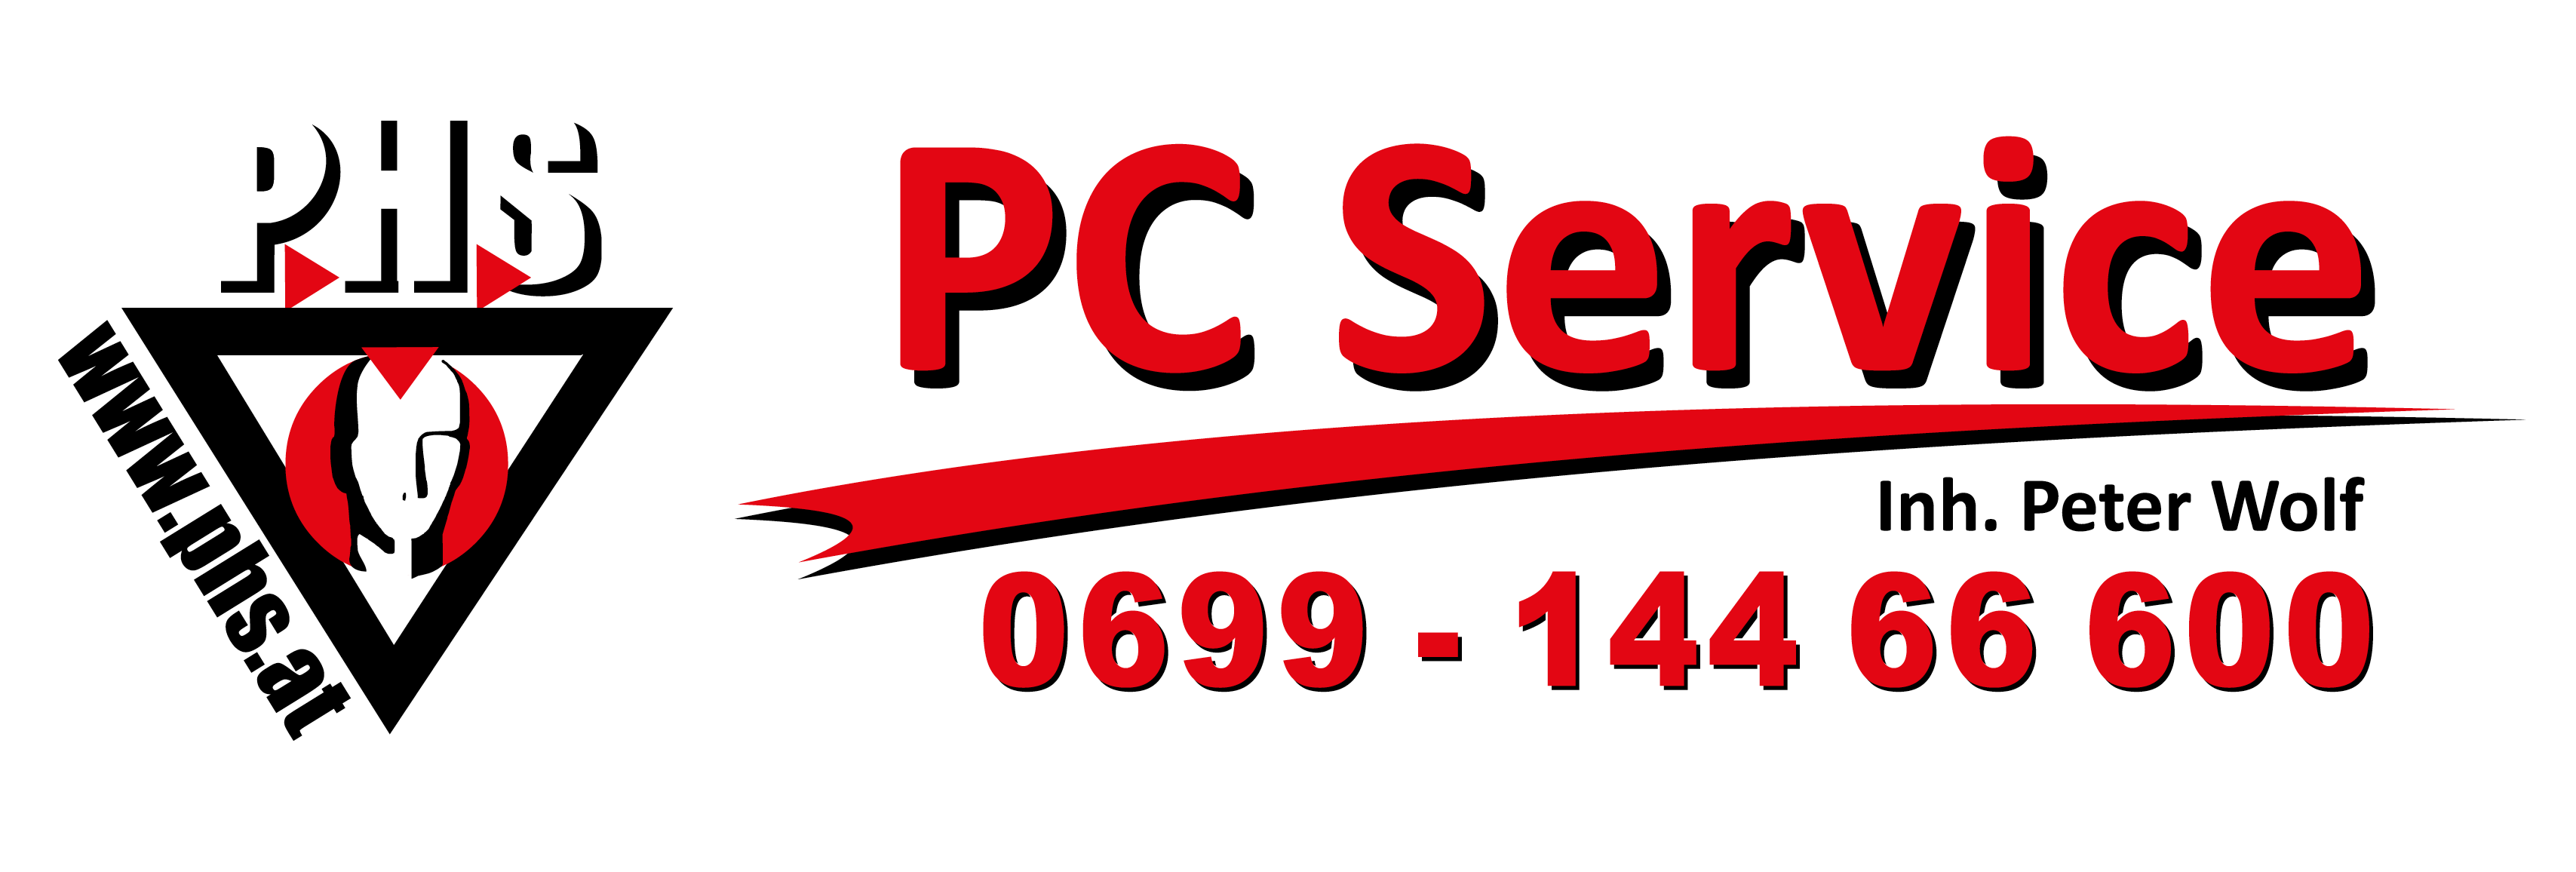 PHS-PC Service Peter Wolf - Telefonnummer: 0699-14466600